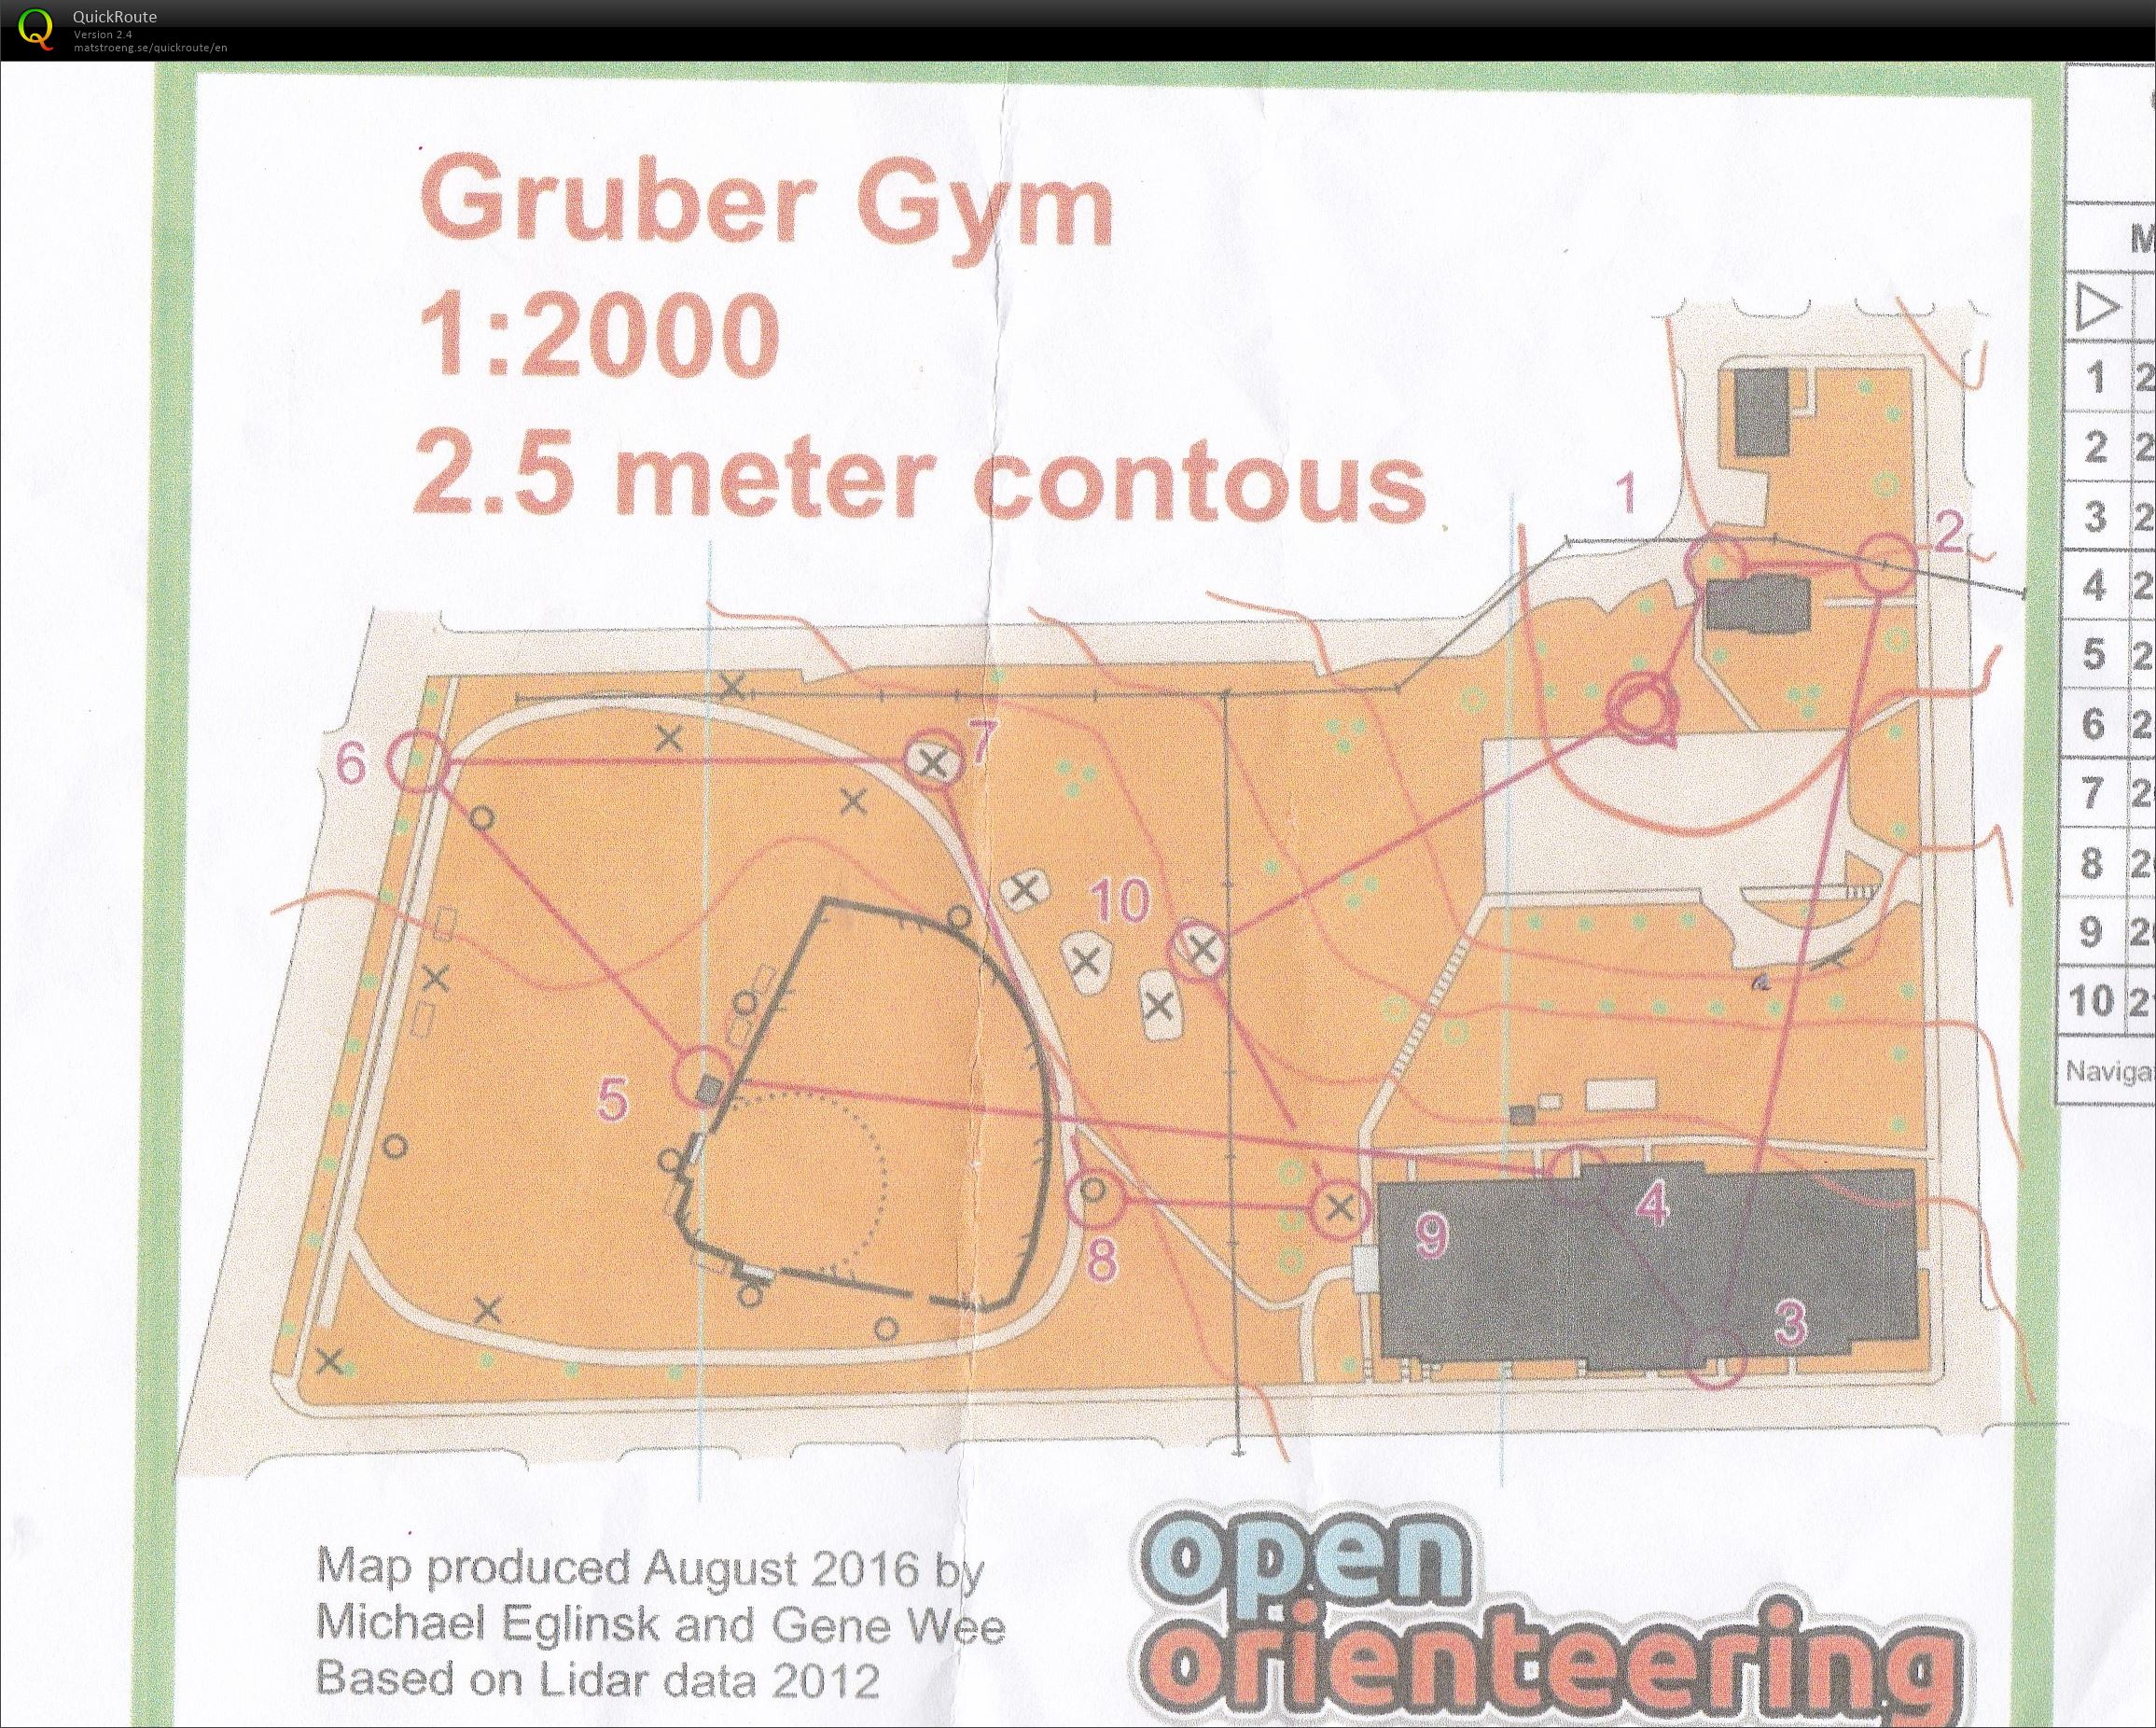 Gruber Gym Mini course (28-10-2017)